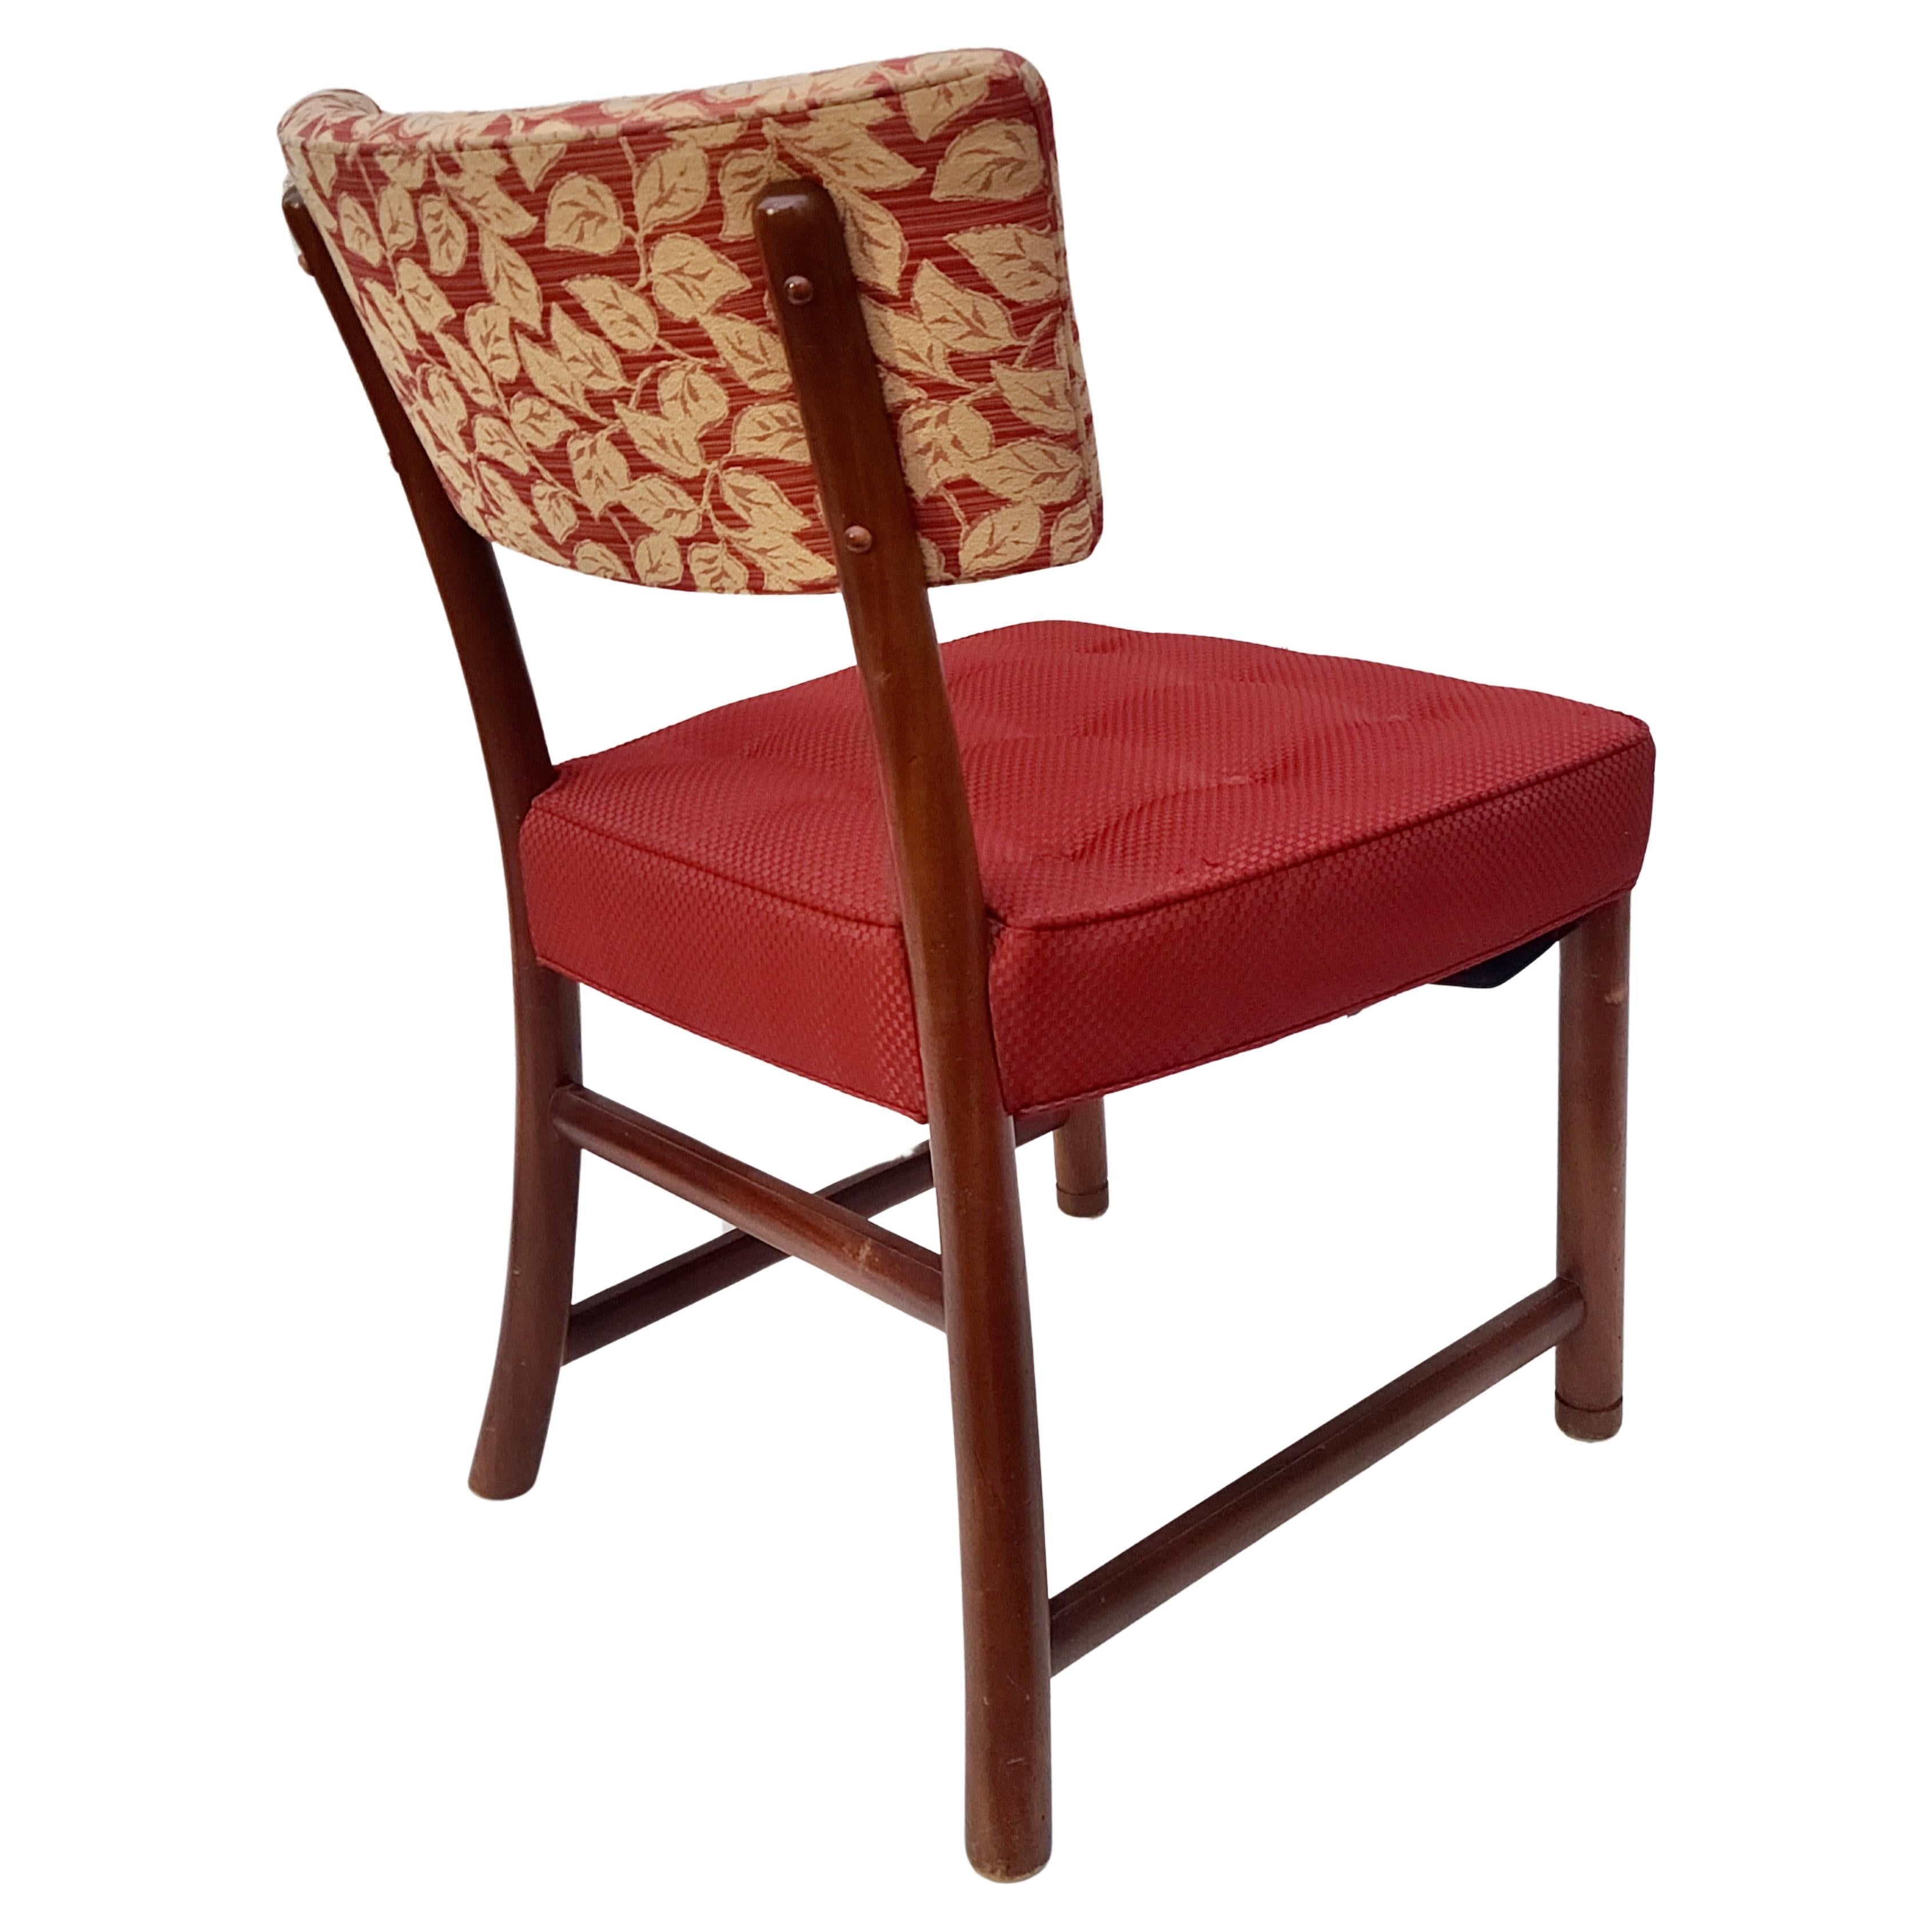 Mid-20th Century Rare Edward Wormley for Dunbar Saber Leg Dining Chair For Sale